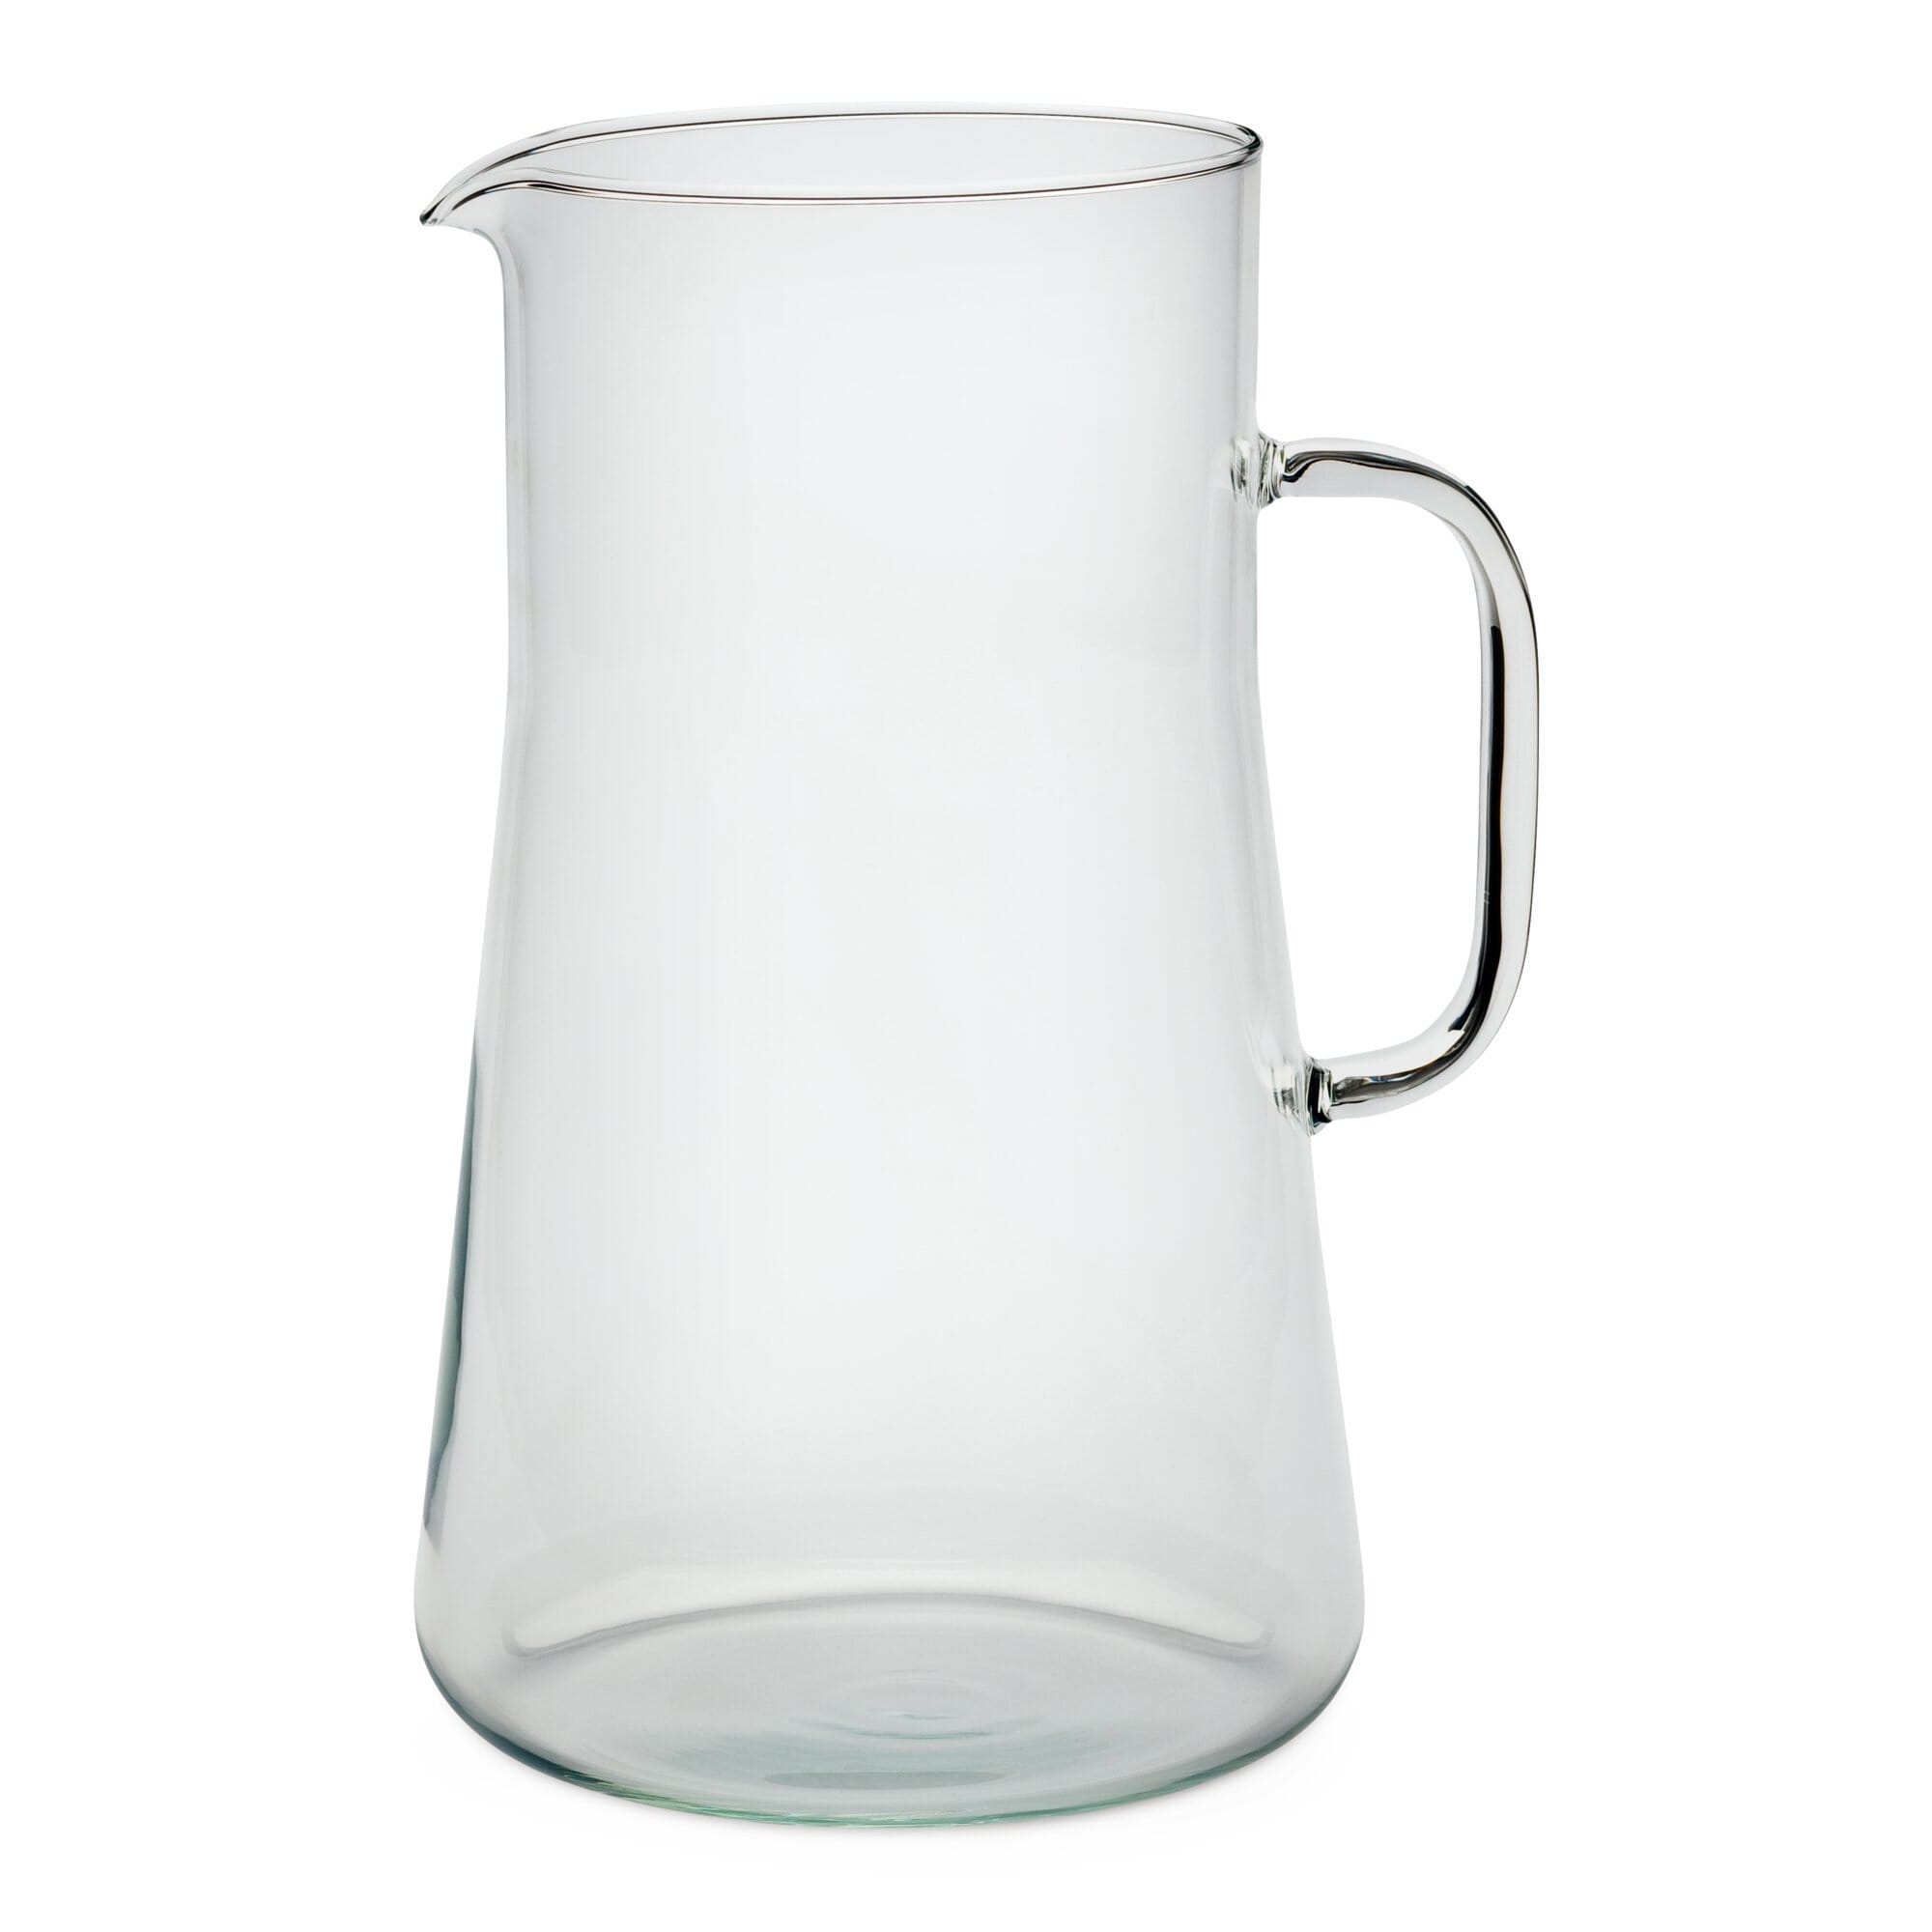 https://assets.manufactum.de/p/028/028177/28177_01.jpg/glass-jug-borosilicate-glass.jpg